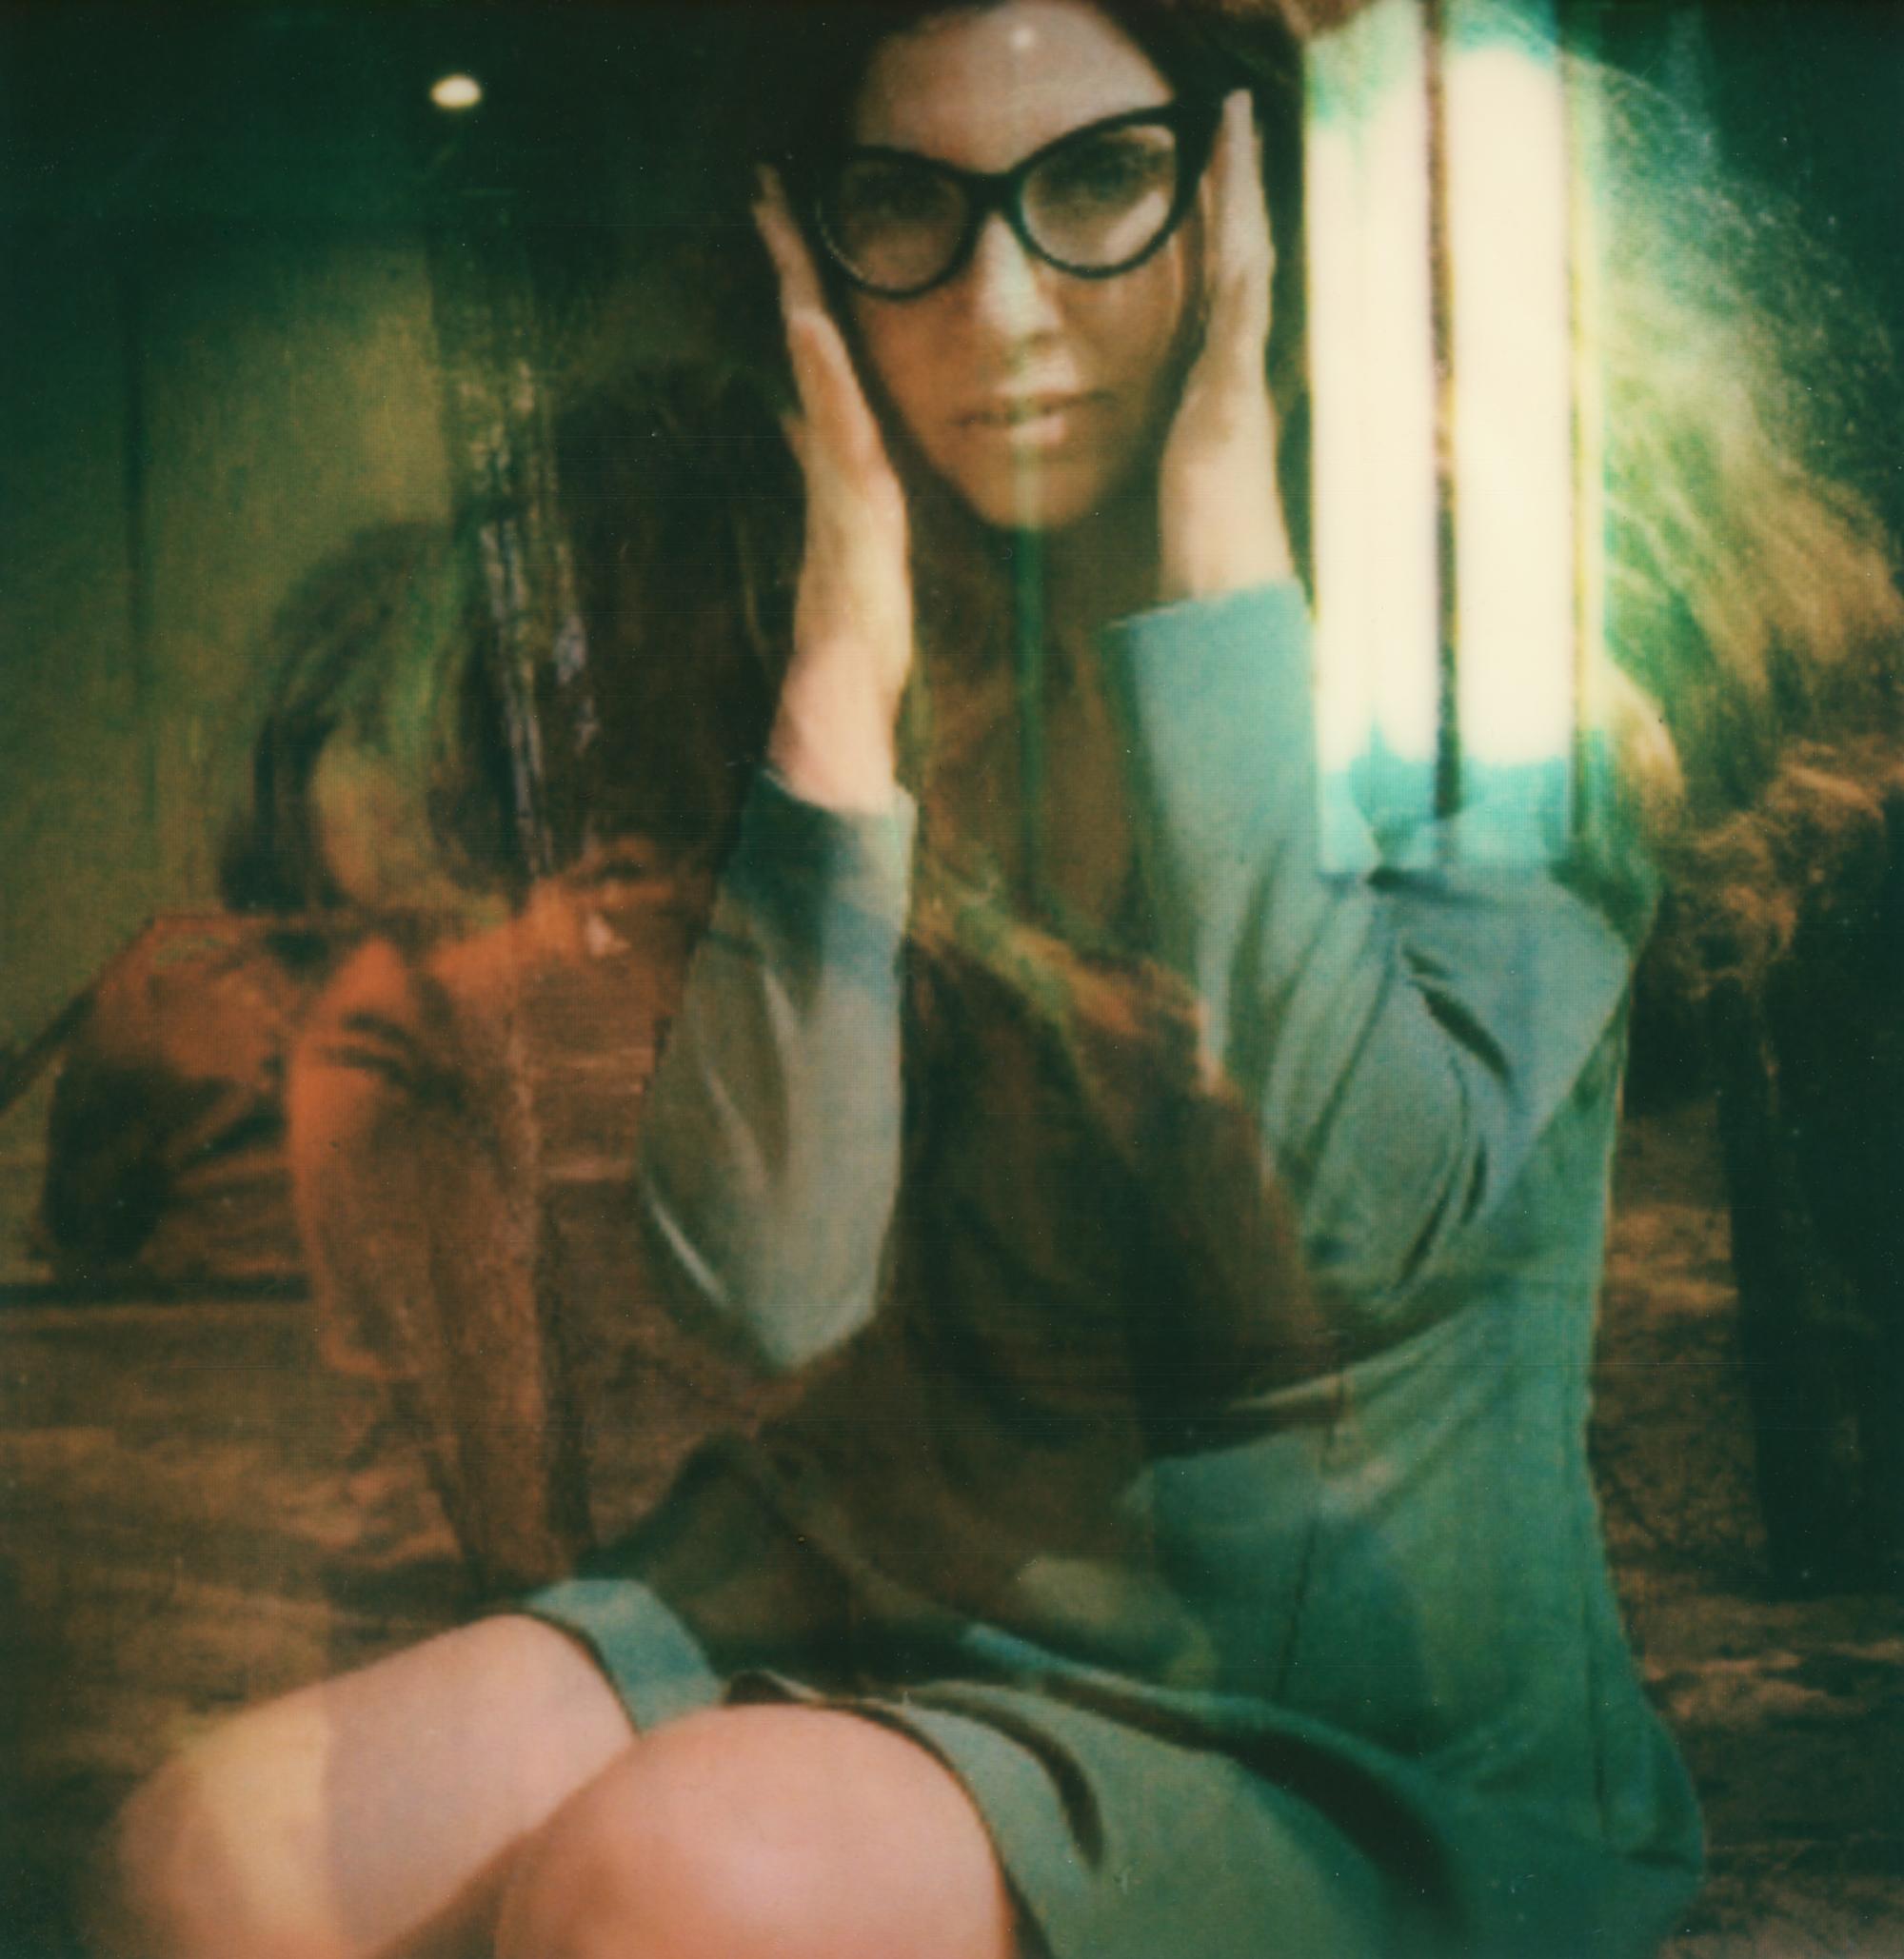 Madrugada - Contemporary, Polaroid, Figurative, Woman, 21st Century, Psychiatry